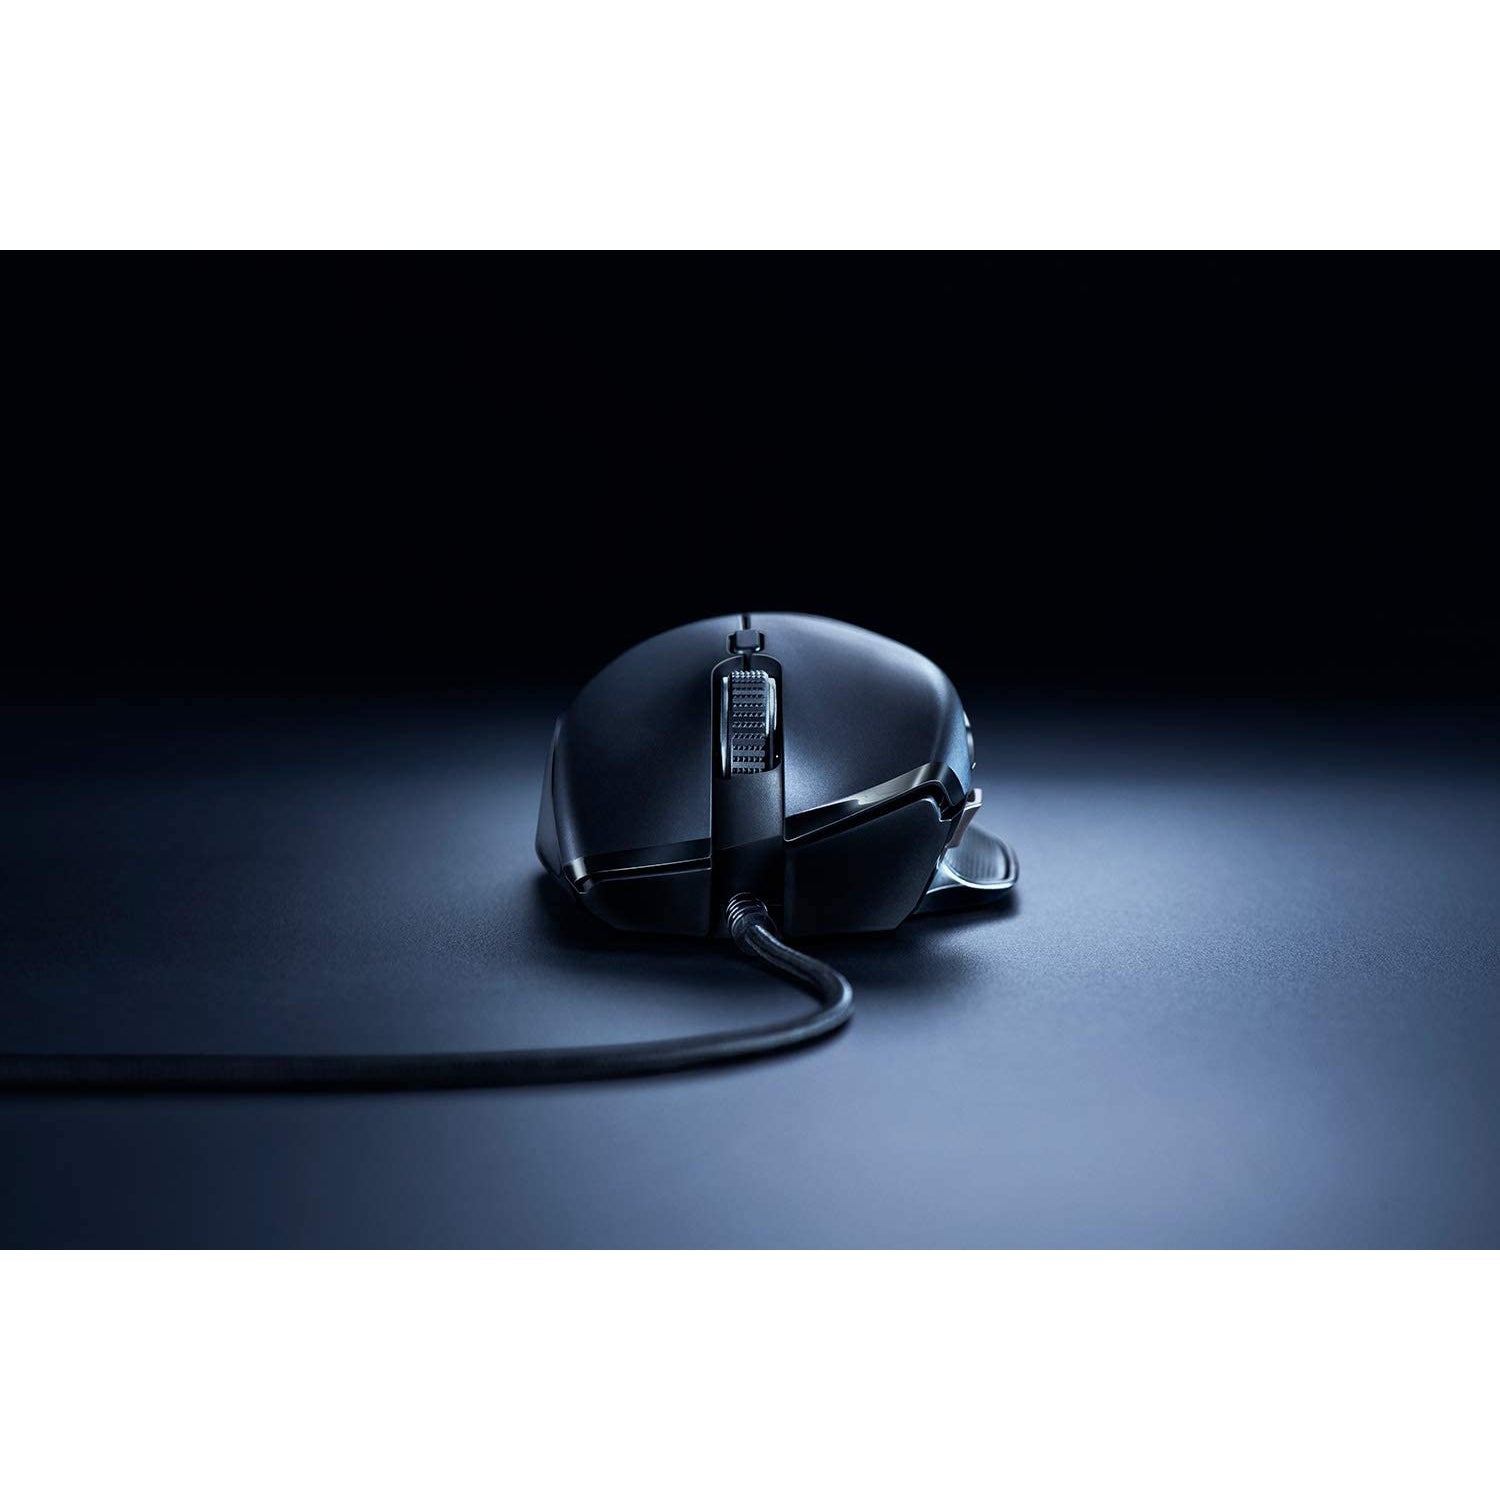 Razer Basilisk Essential - Ergonomic FPS Gaming Mouse - New